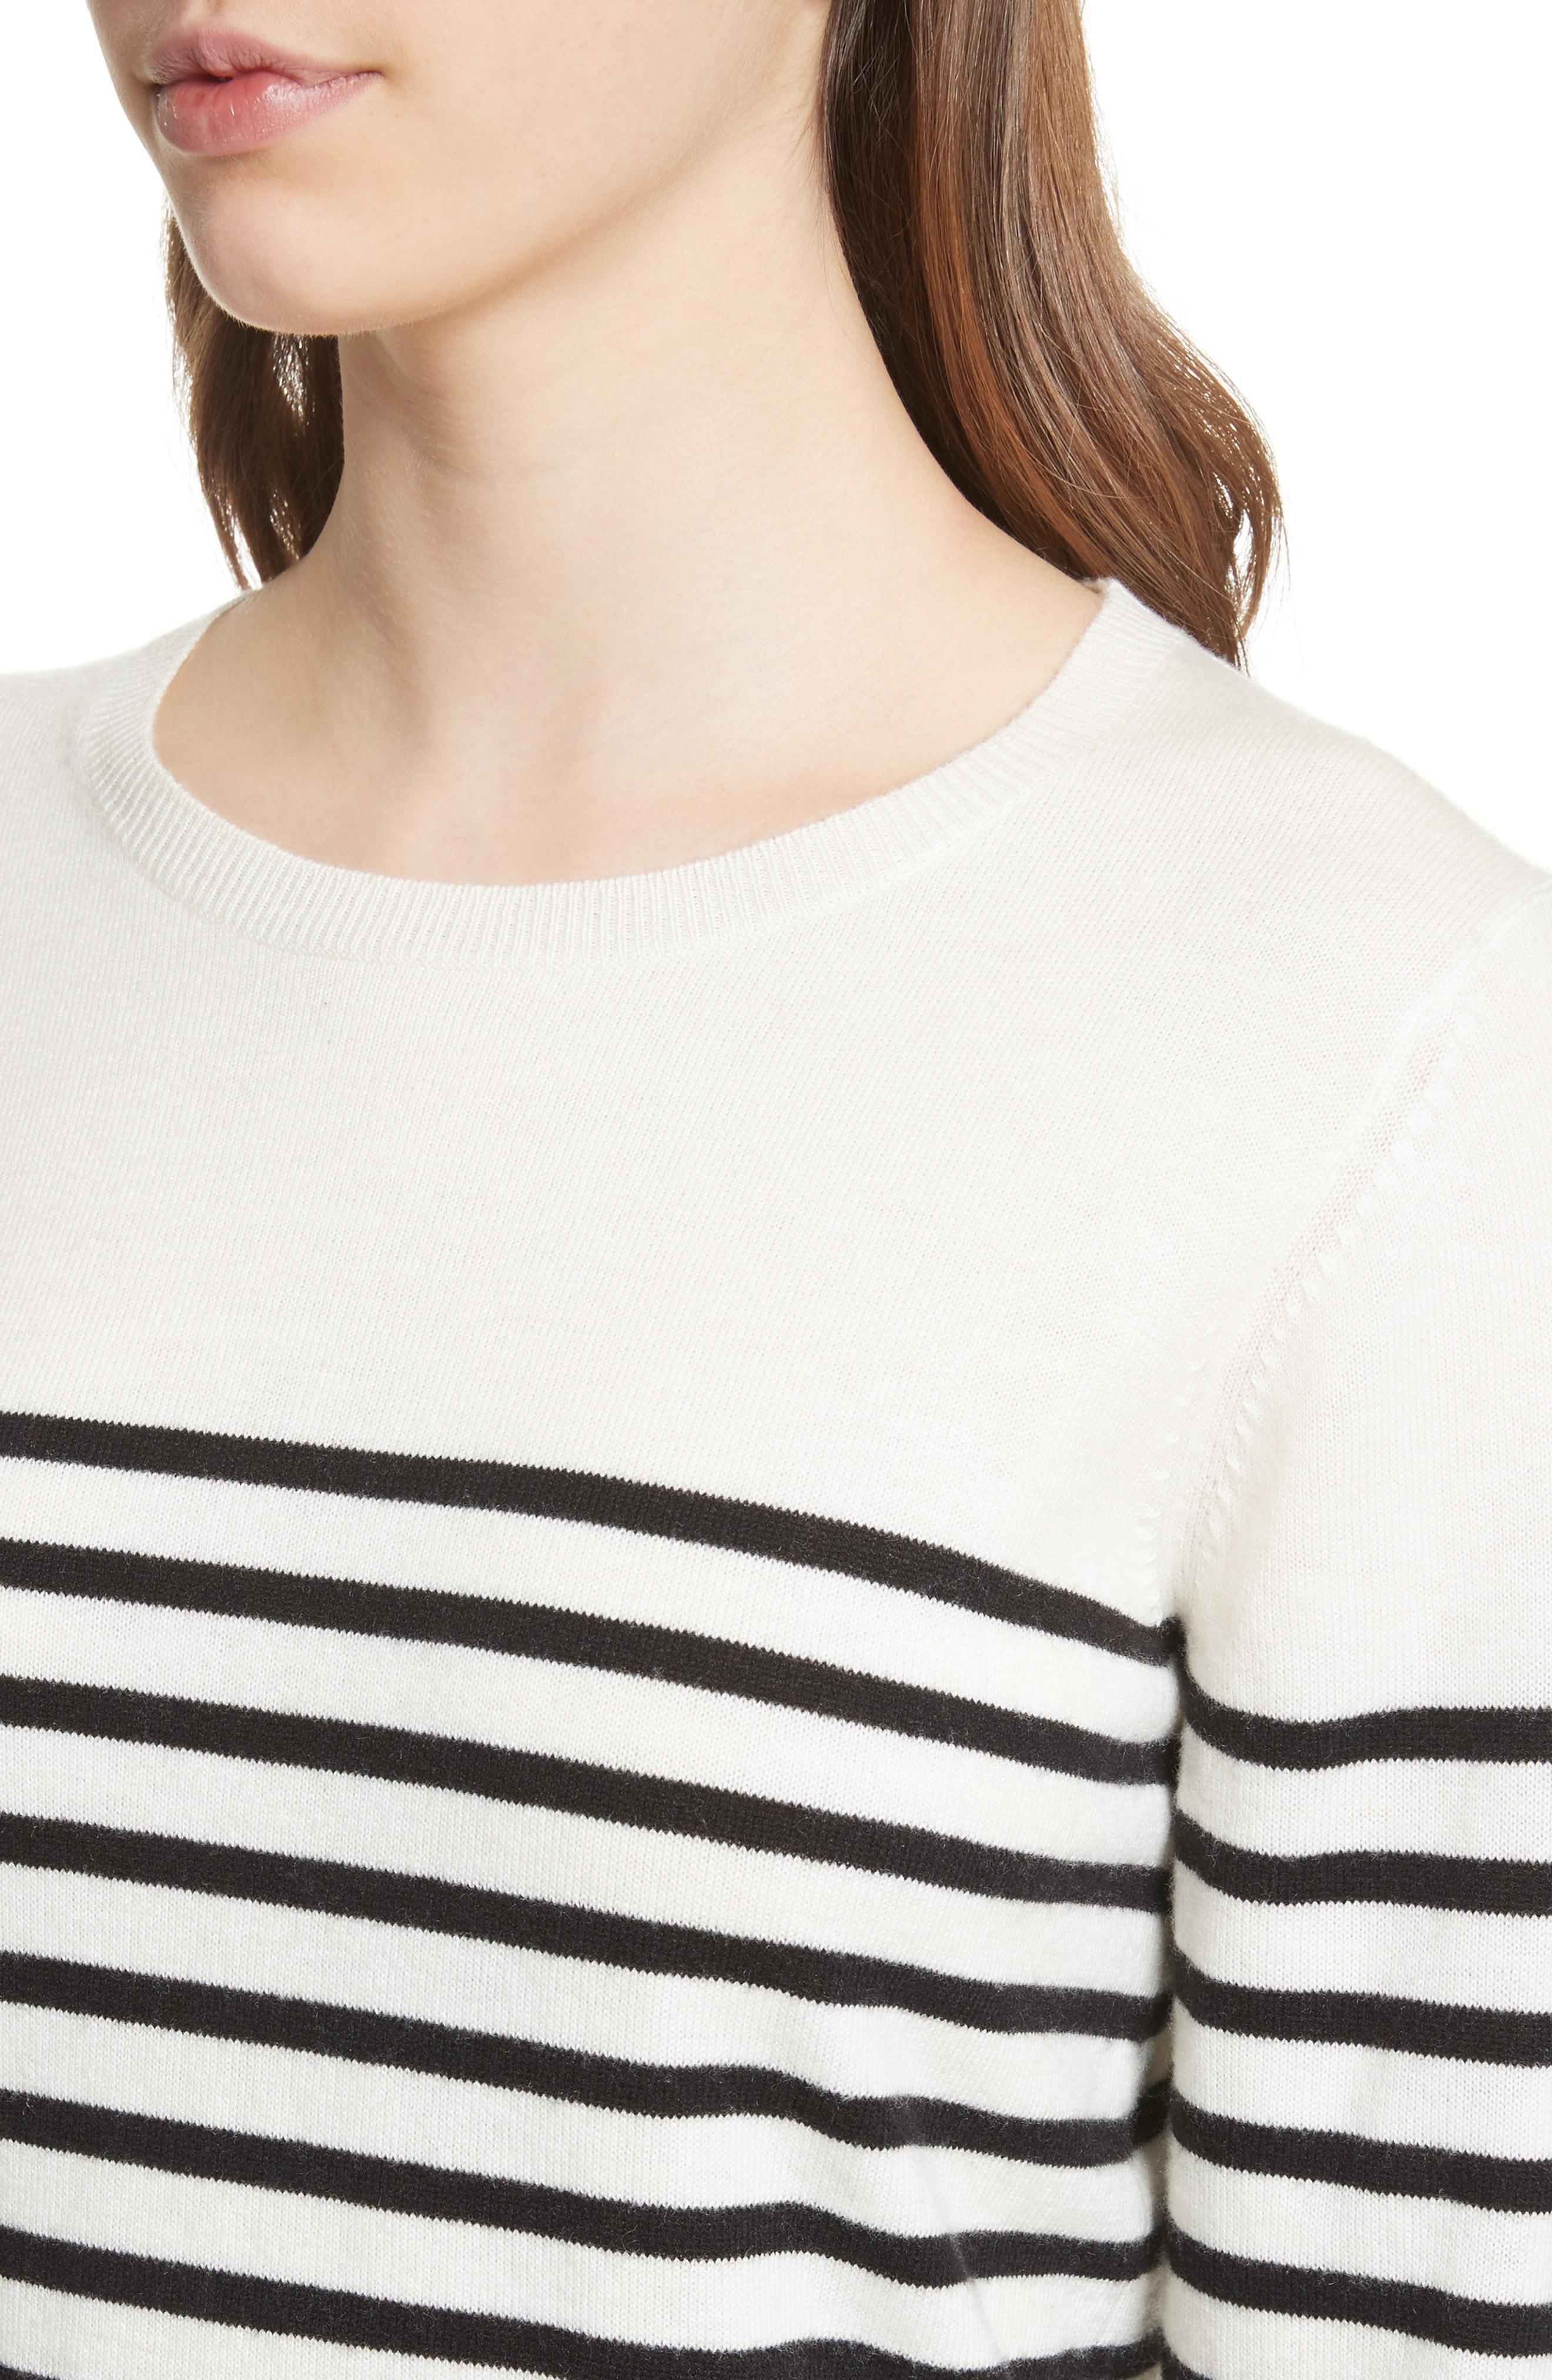 Kate Spade Heart Patch Sweater In Black/cream | ModeSens